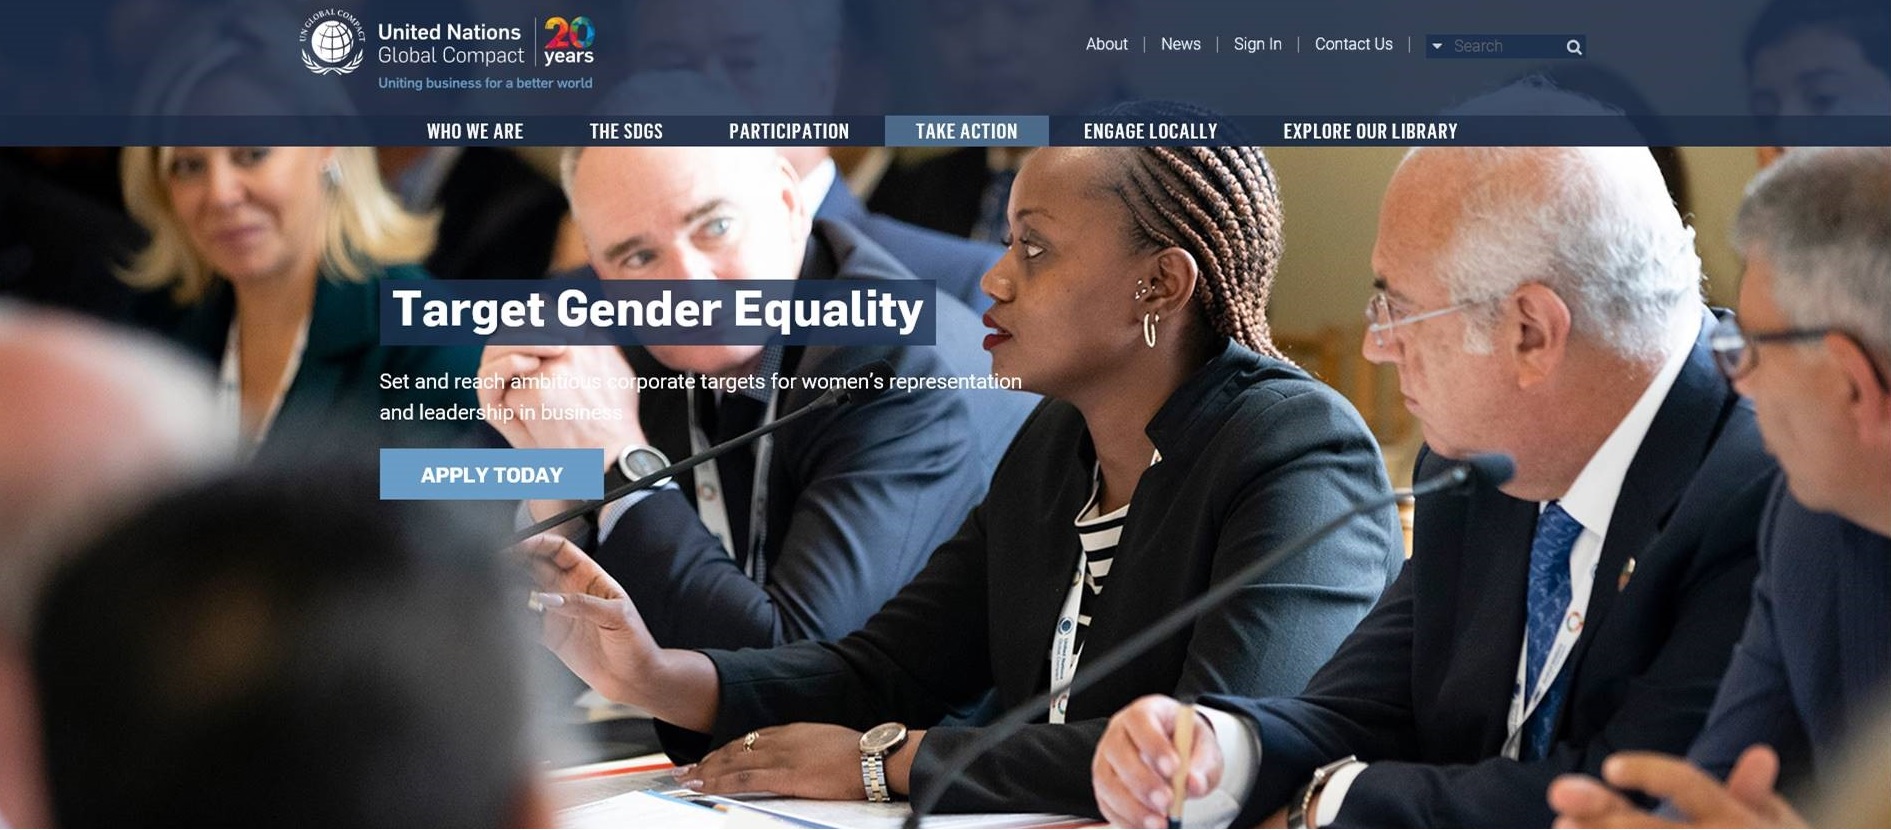 UN Global Compact Target Gender Equality Programm